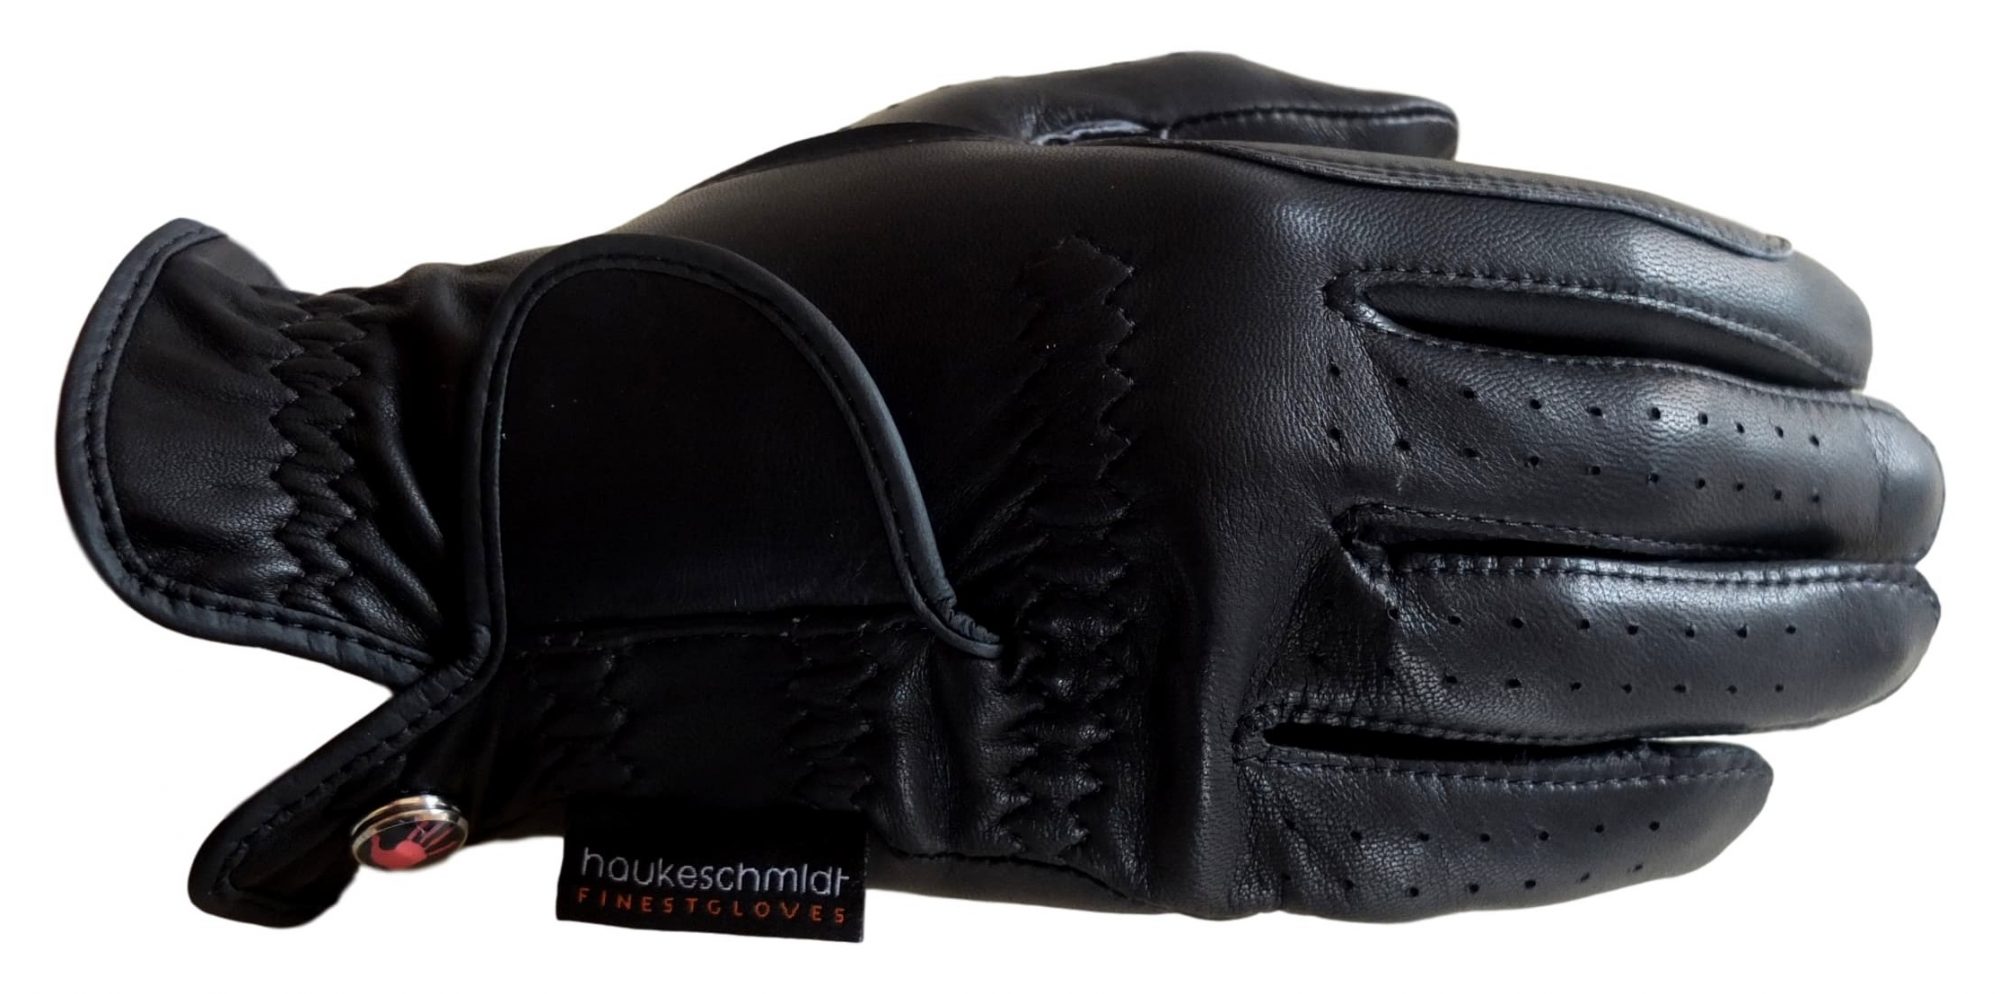 Alergia Ejecutante Sencillez Hauke Schmidt Galaxy Leather Riding Glove - Gloves